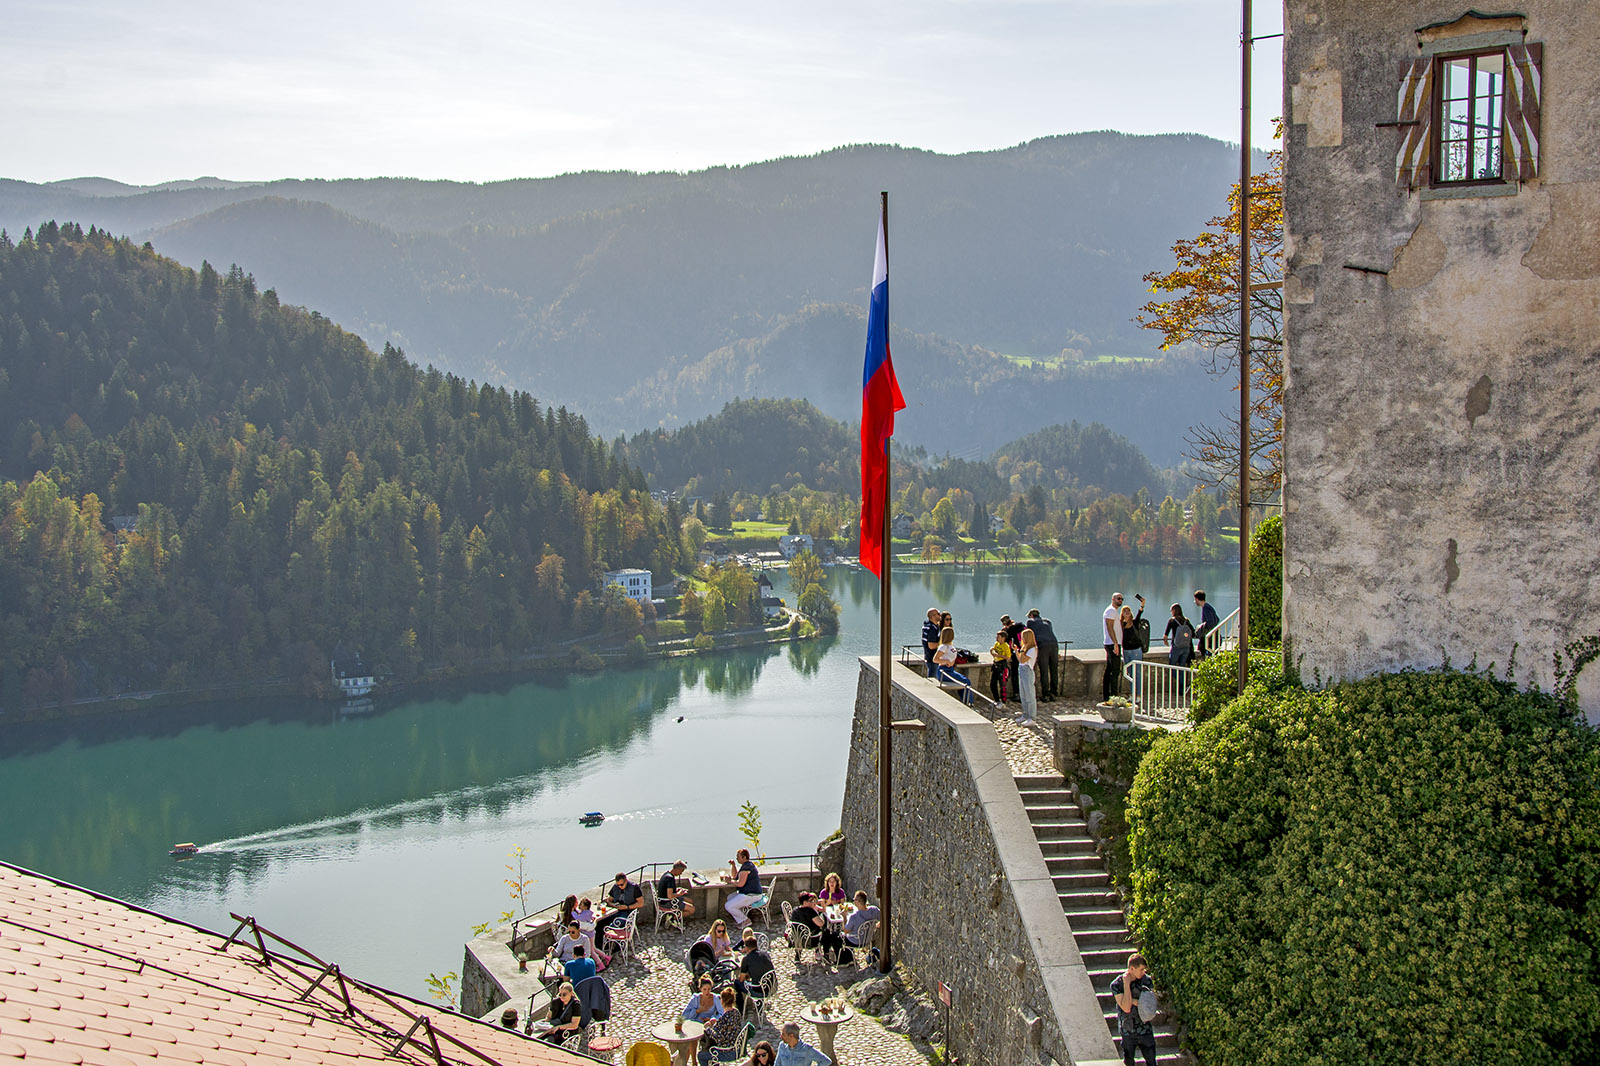 Bled Castle Slovenia